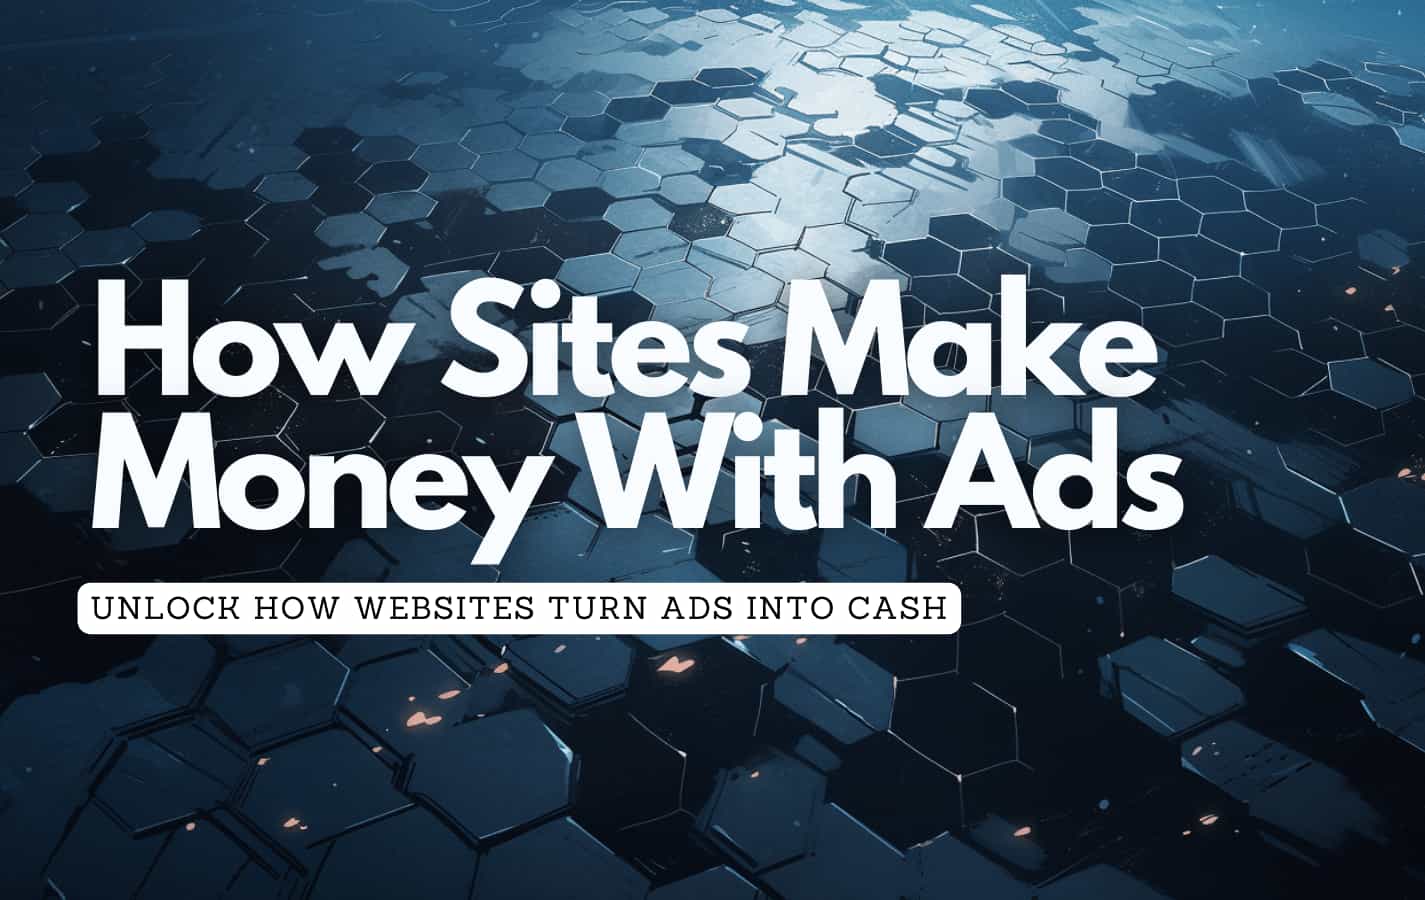 How Do Websites Make Money From Ads